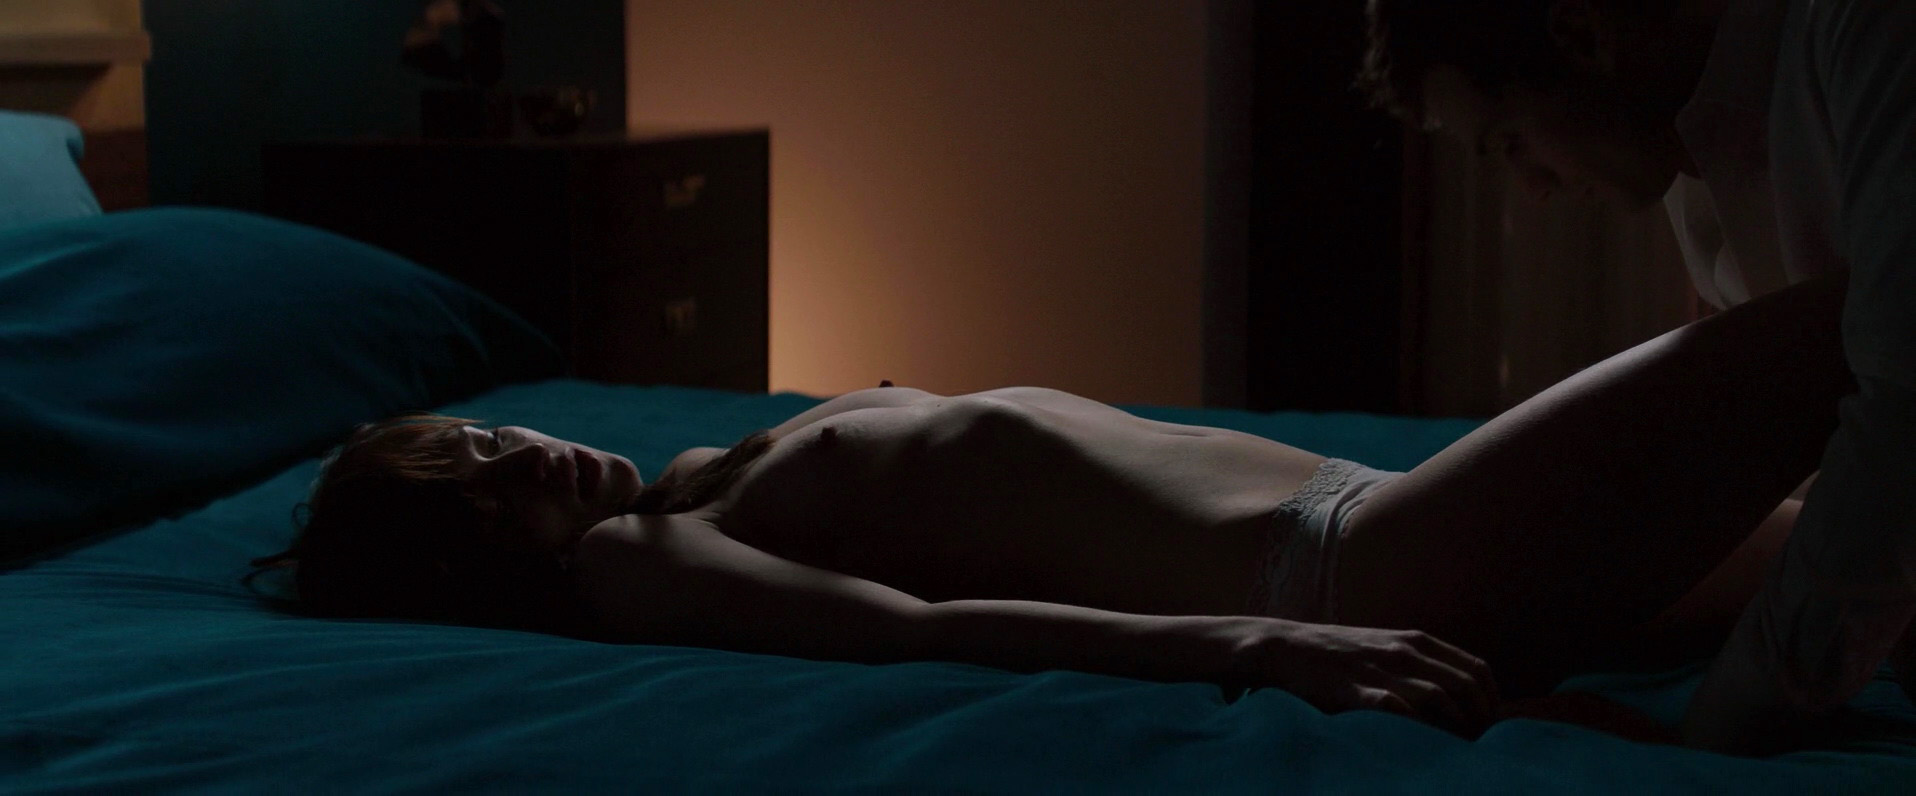 Dakota Johnson - Fifty Shades of Grey (2015) HD 1080p [uncut version]